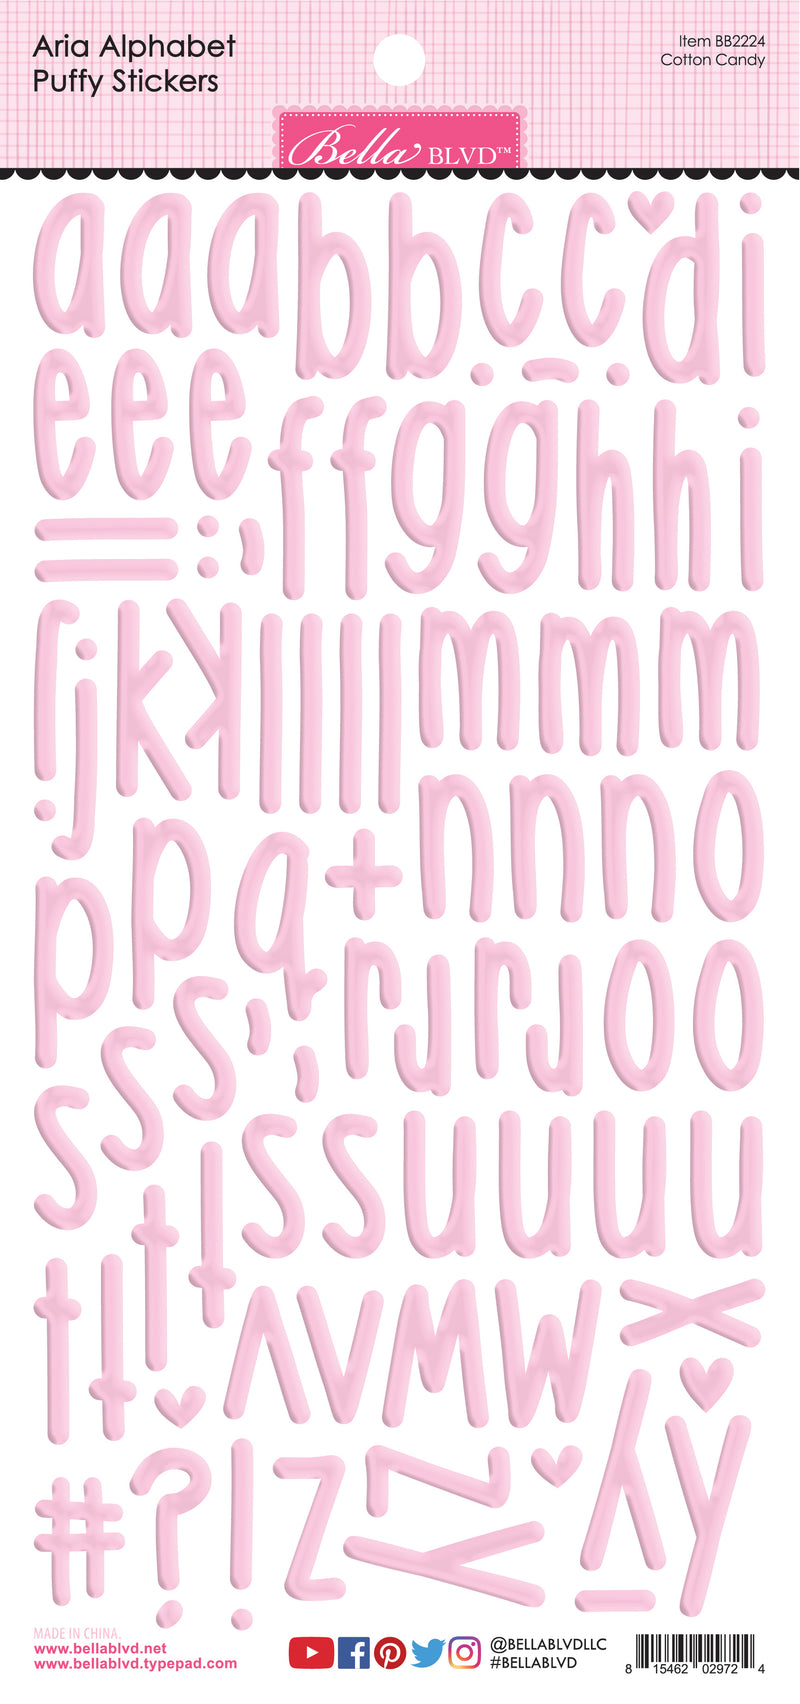 Aria Alphabet Puffy Stickers - Cotton Candy